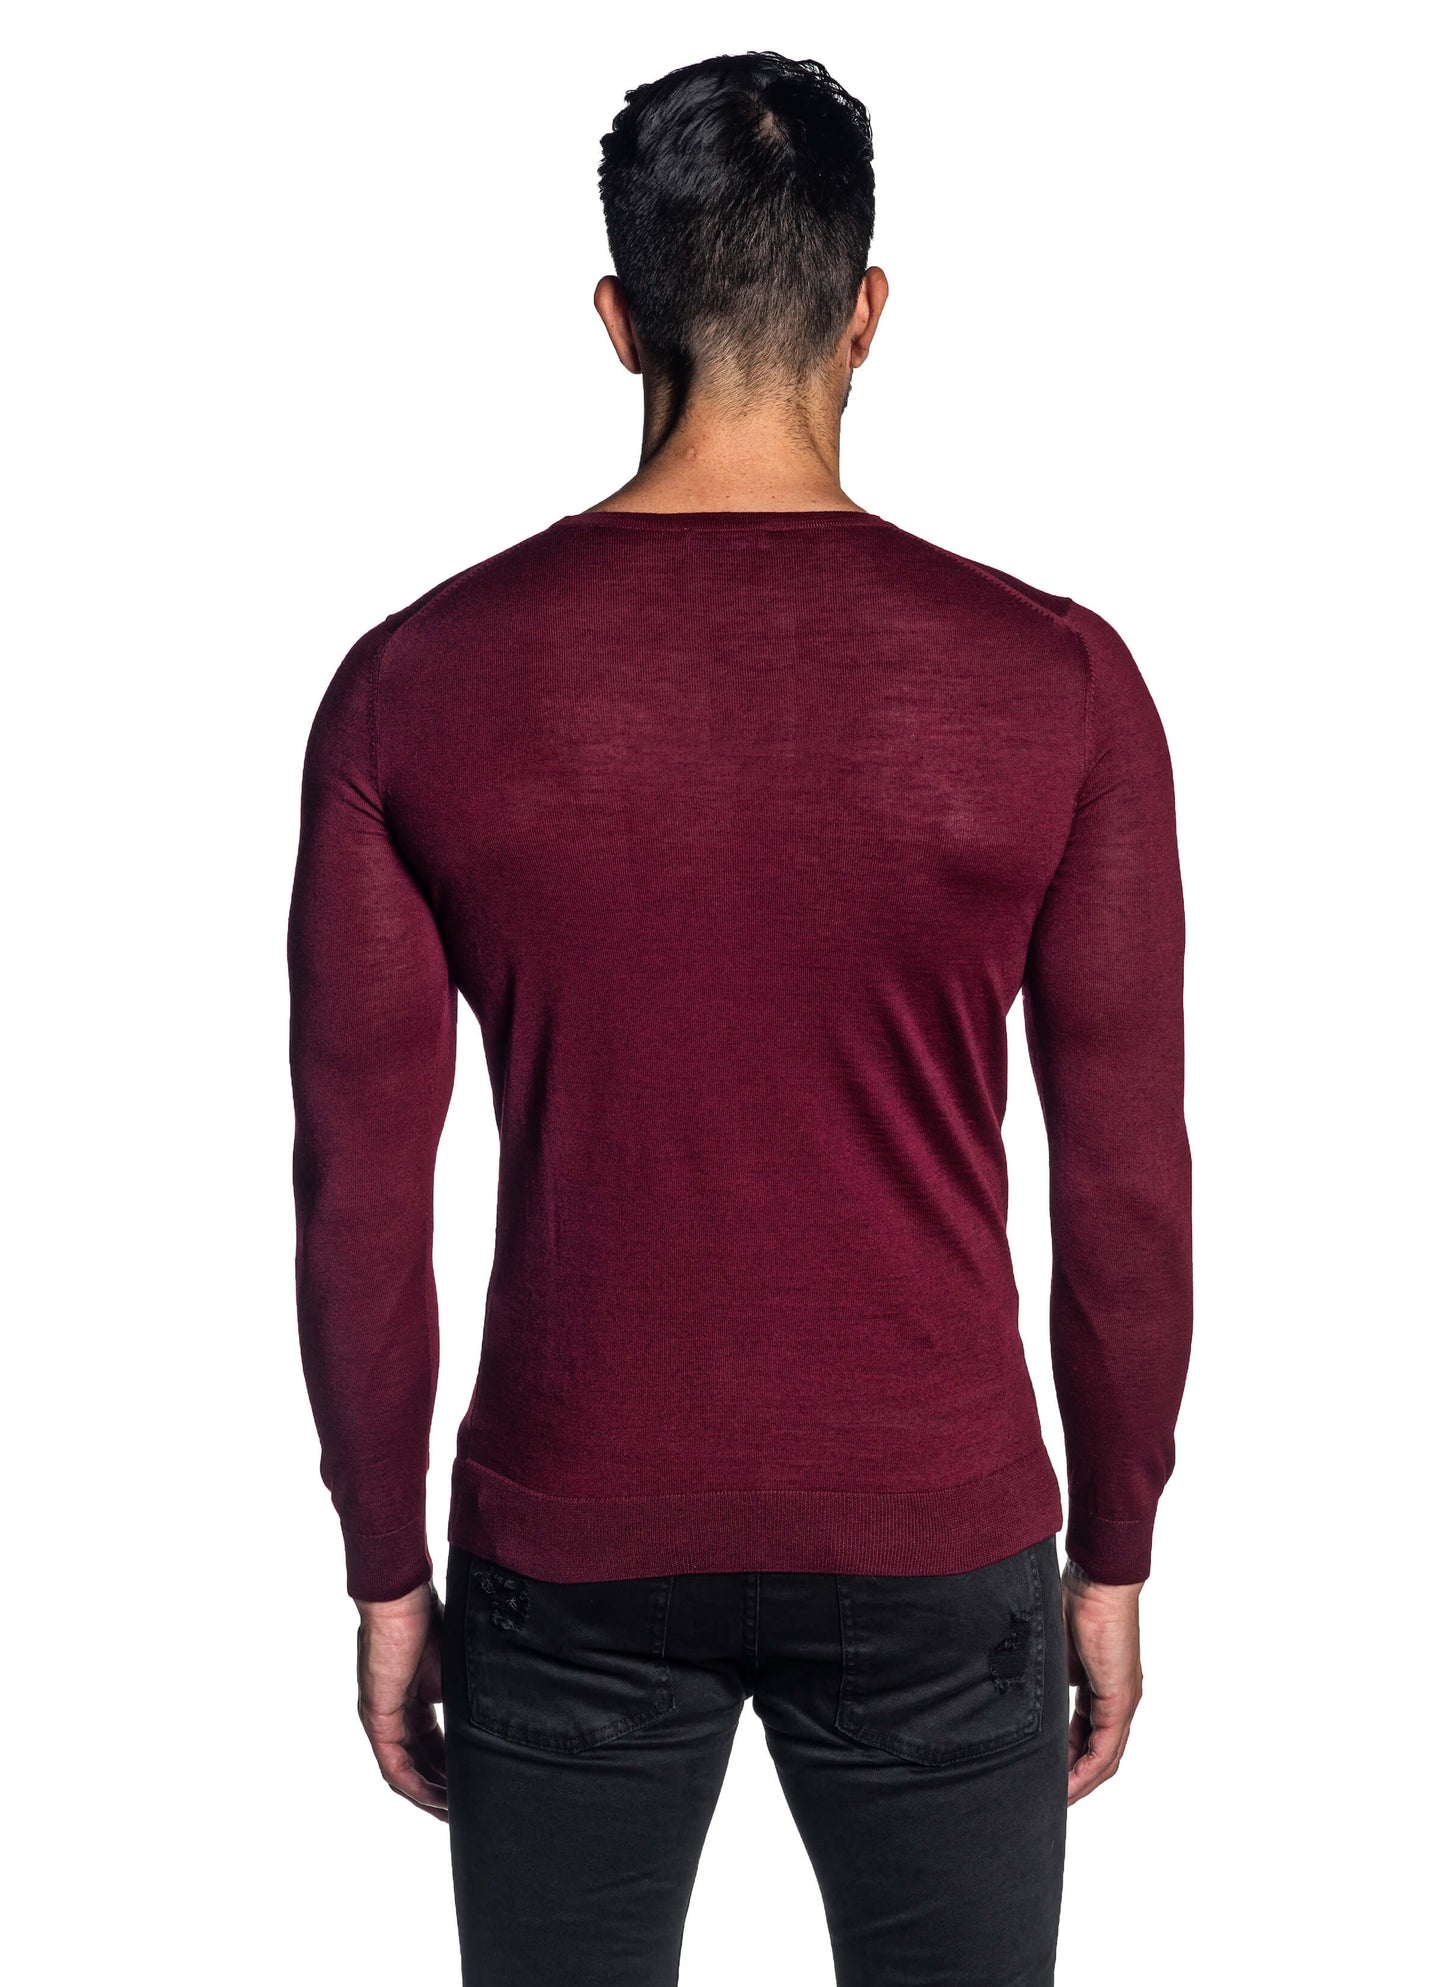 Red Crew Neck Sweater for Men H-02682-06 - Back - Jared Lang